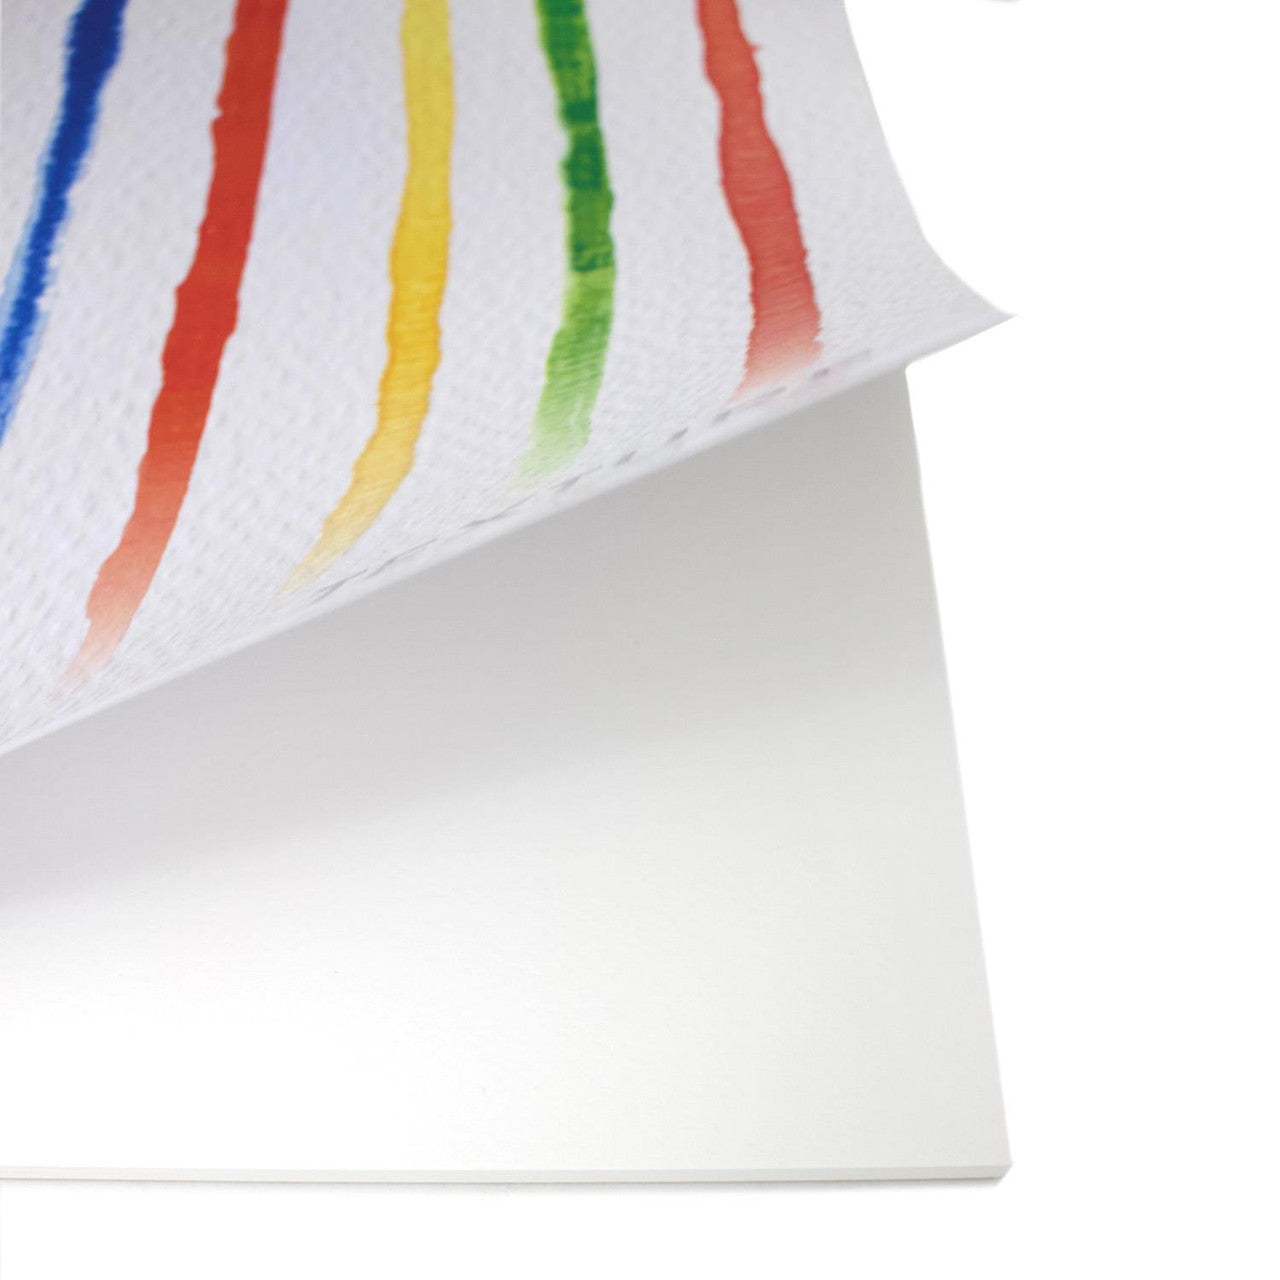 Artway '35' Watercolour Pad - 300gsm - 35% Cotton - A4/A3